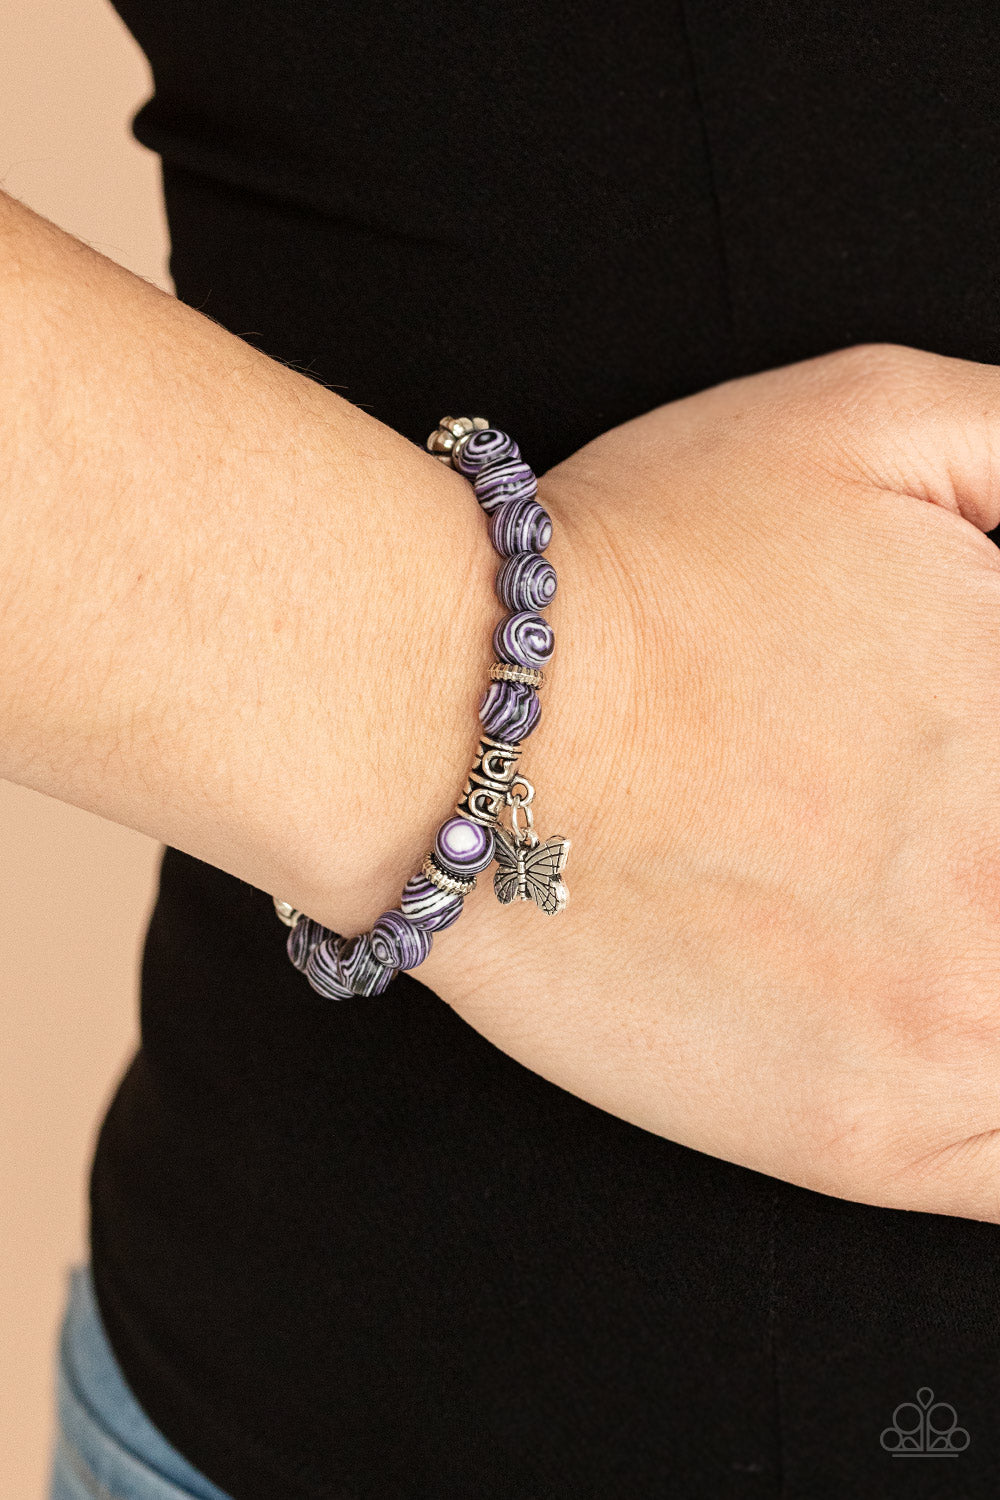 Butterfly Wishes​ - purple - Paparazzi bracelet